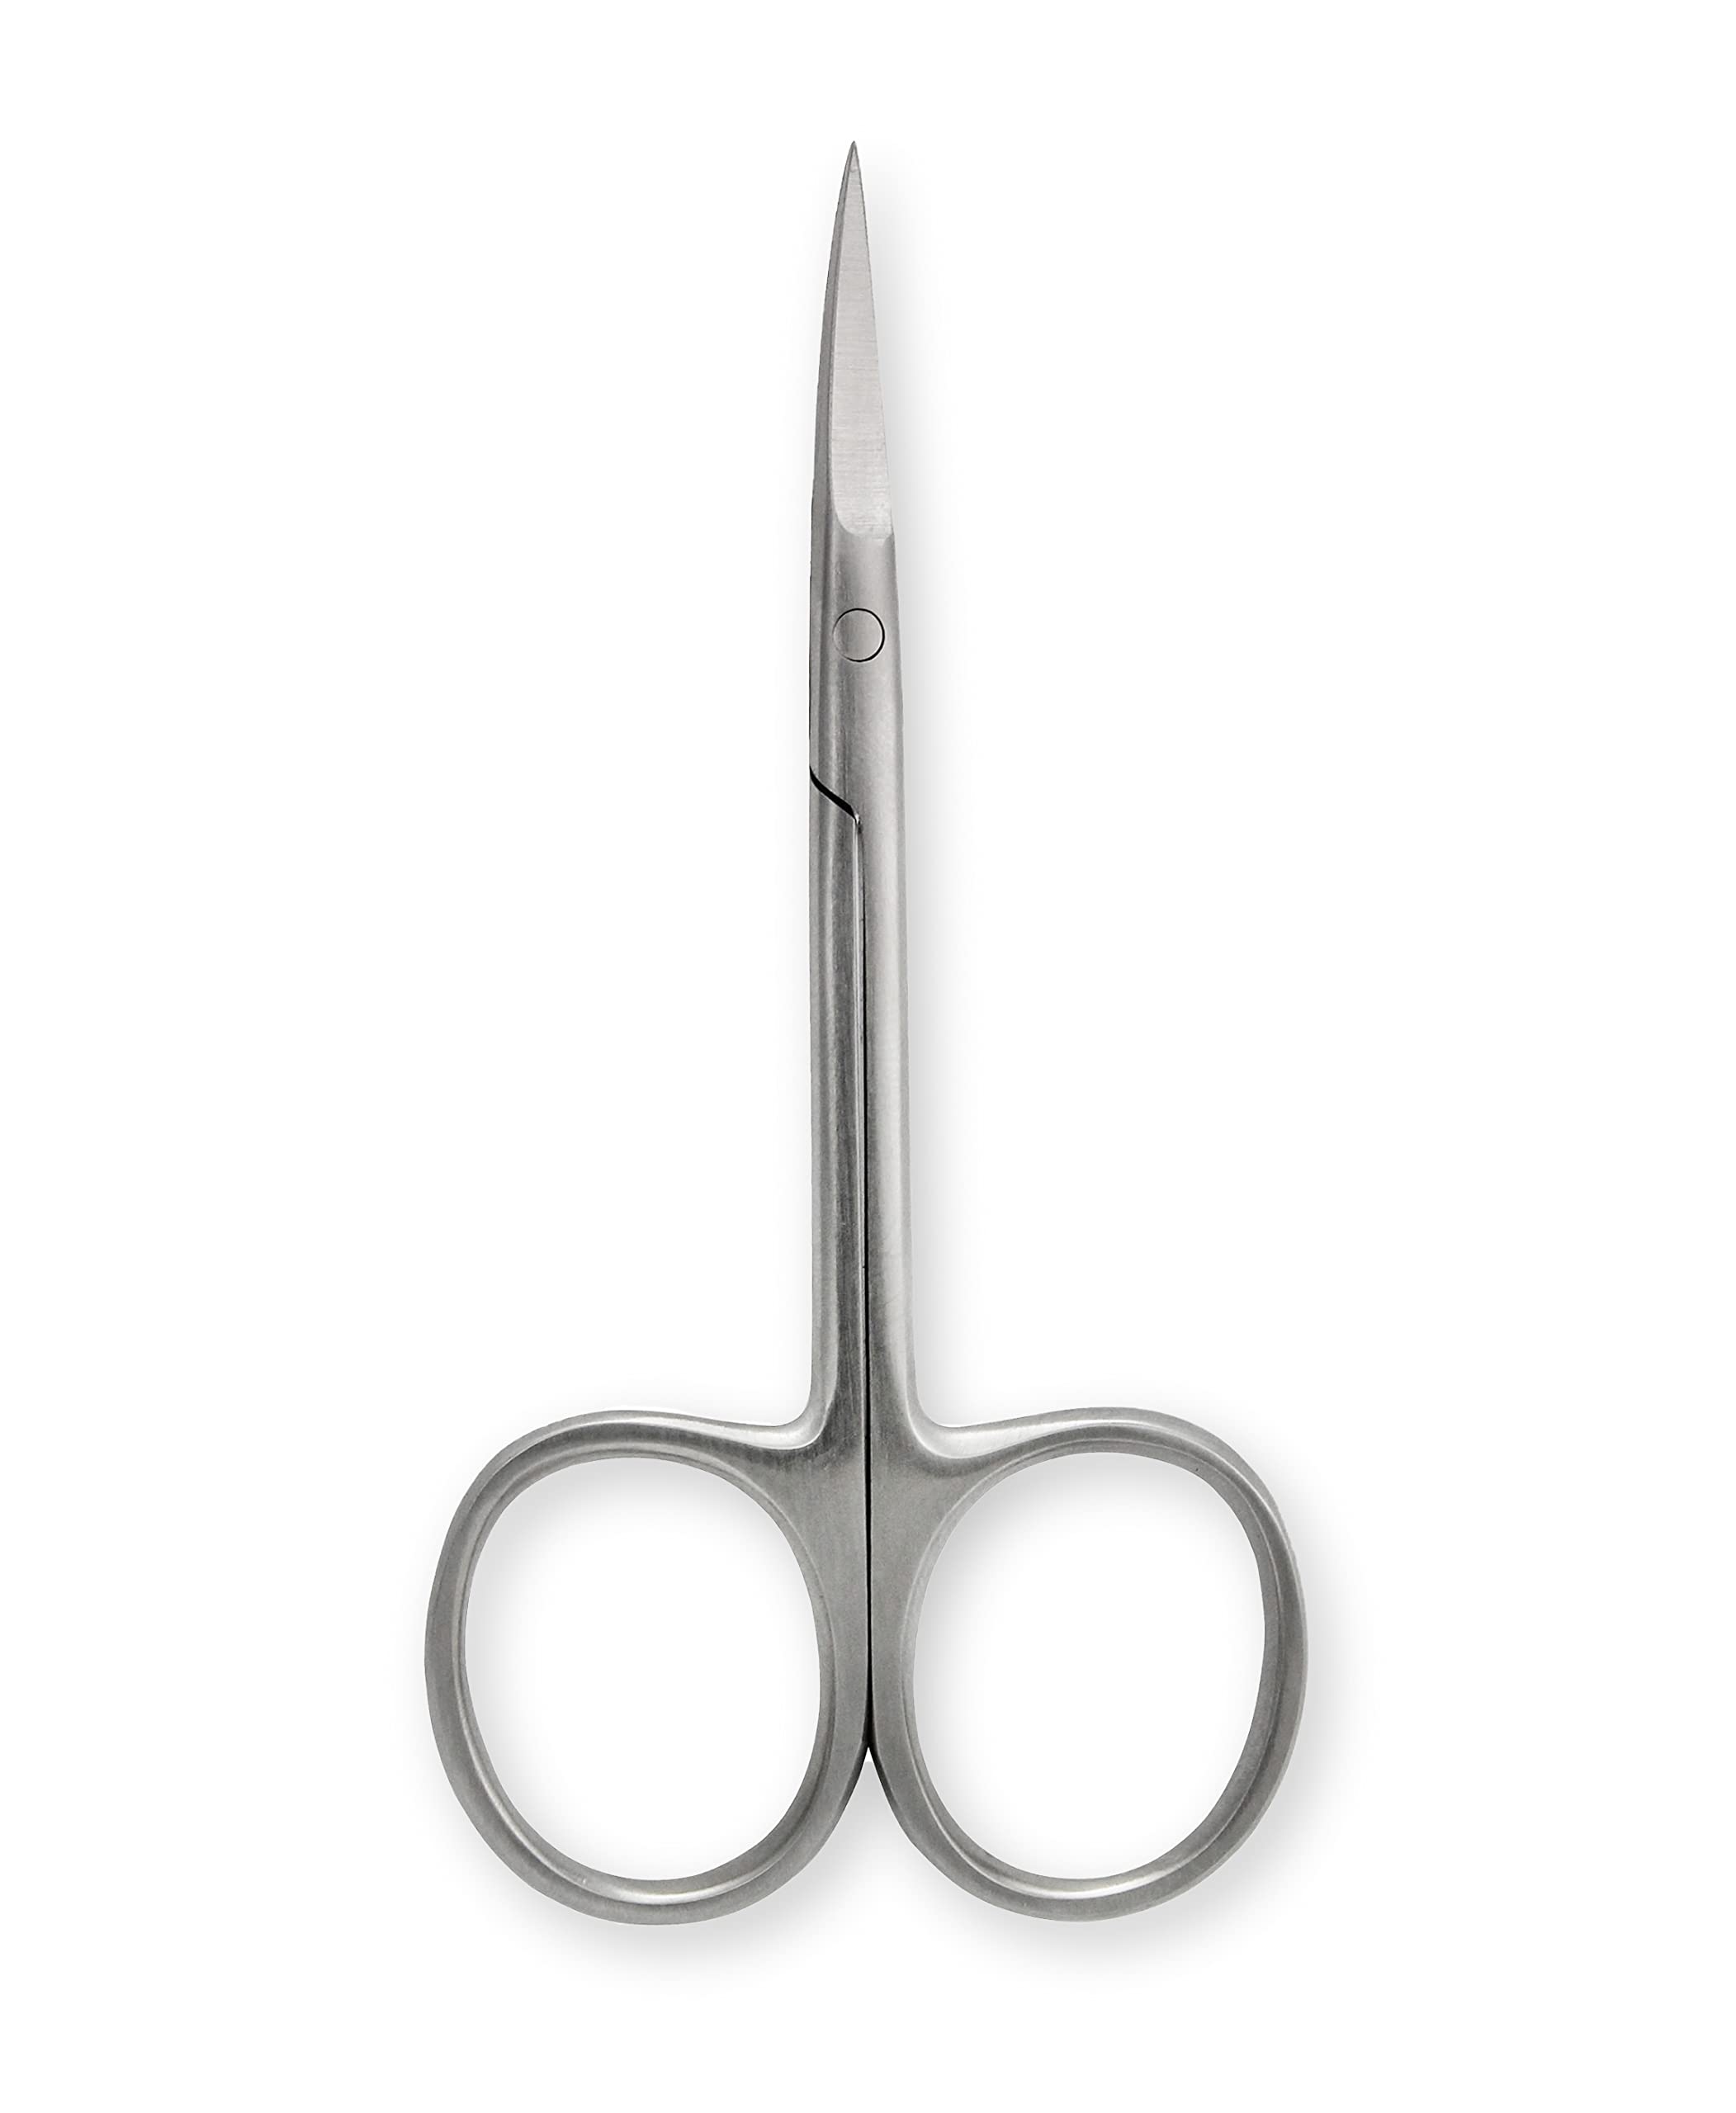 Amazon Basics Beauty Scissors, Stainless Steel, Silver